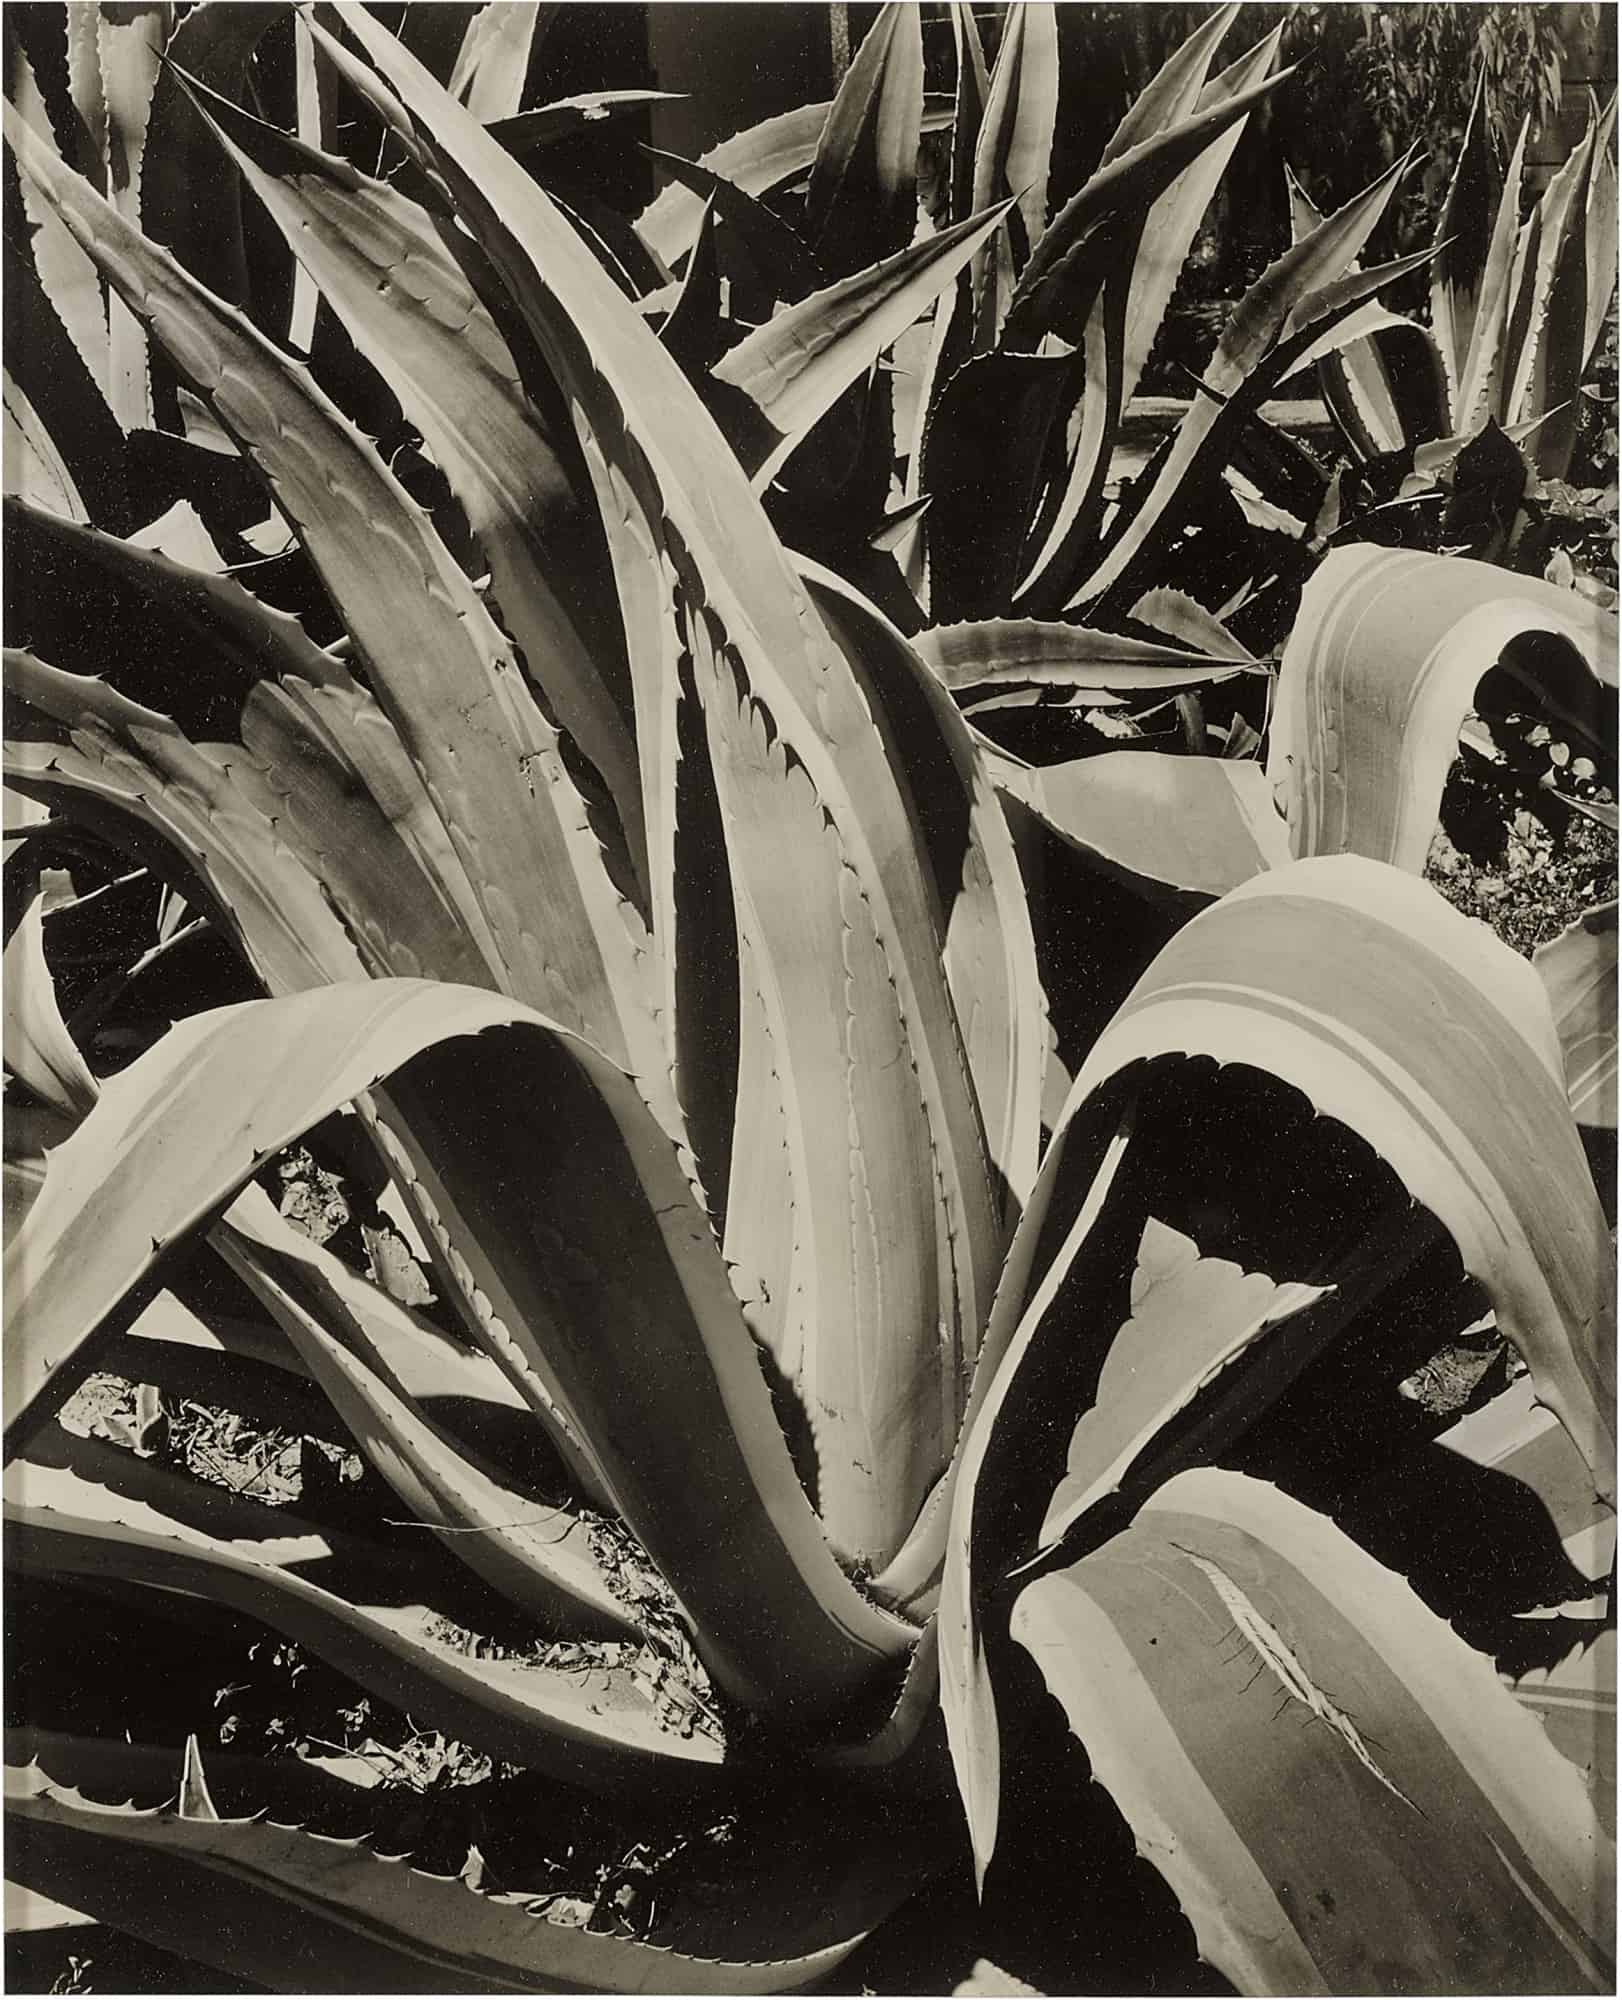 Imogen Cunningham, Untitled, (Agave), 1930s. Modern Objects, Huxley-Parlour Gallery, 3–5 Swallow St, London, W1B 4DE.